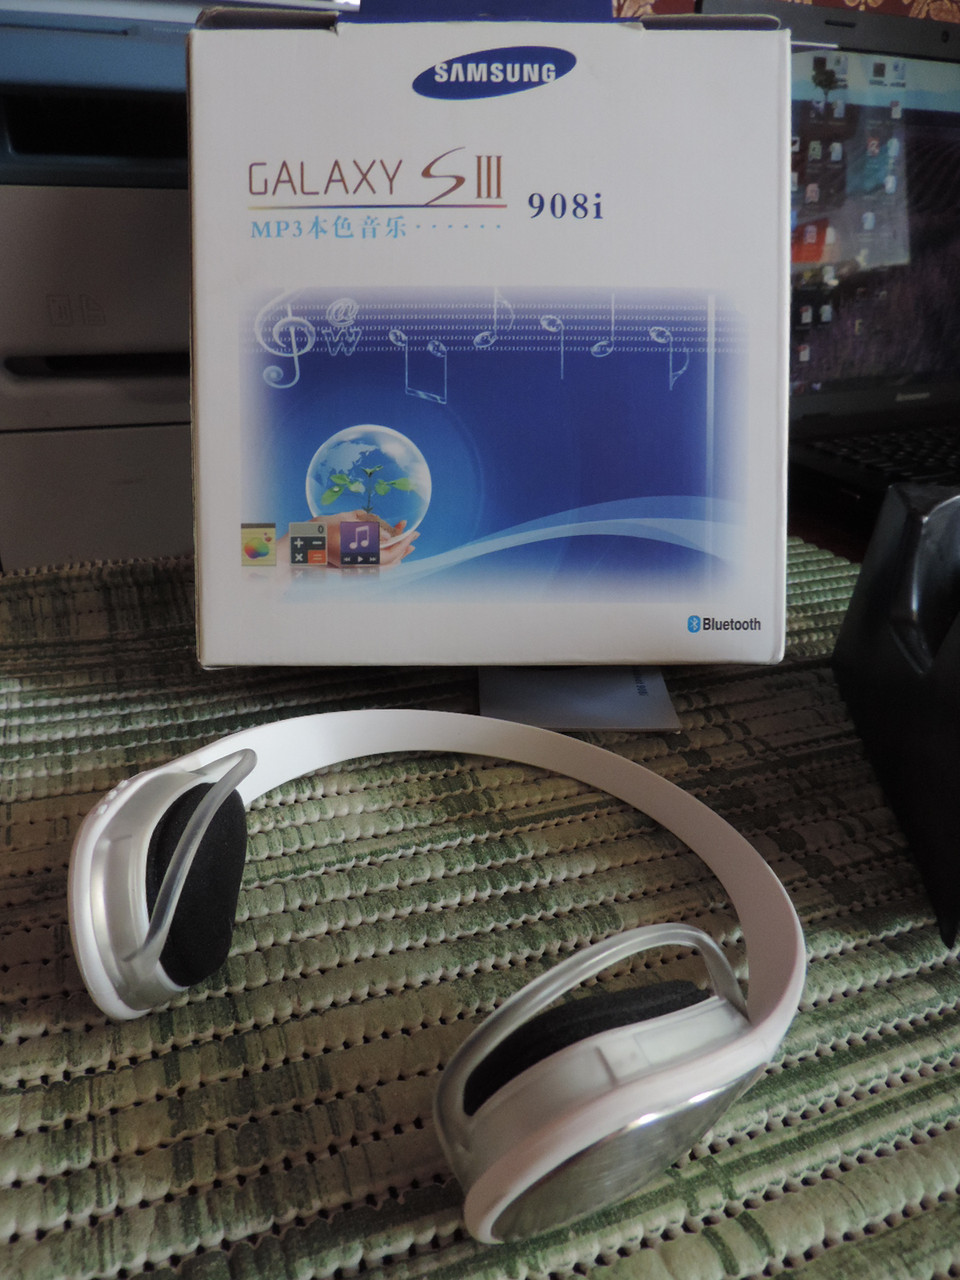 Бездротові Bluetoot навушники Samsung "Galaxy S3 908i".